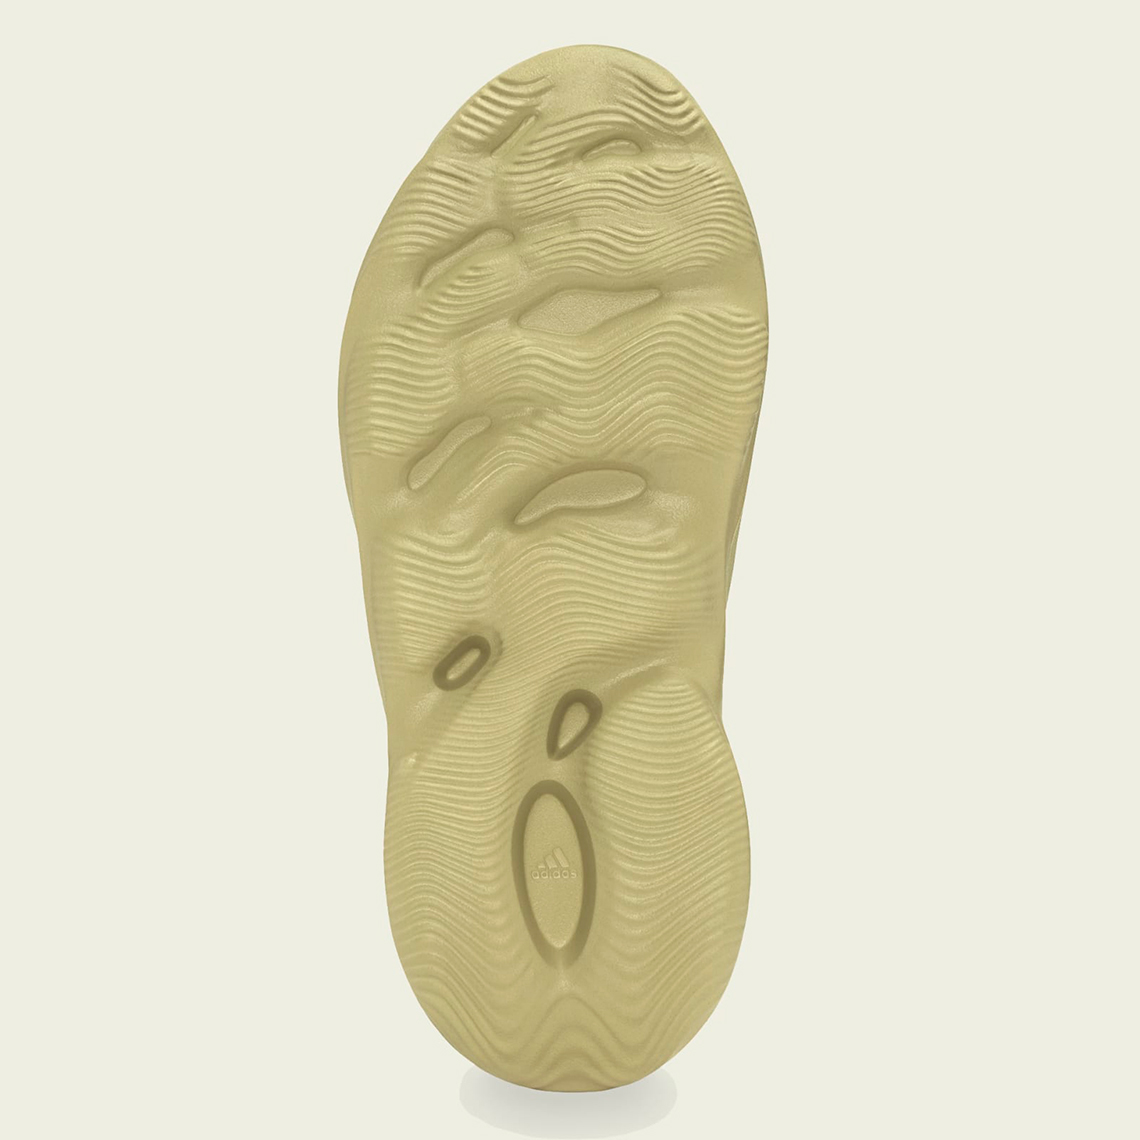 adidas Yeezy Foam Runner Sulfur GV6775 Store List 3